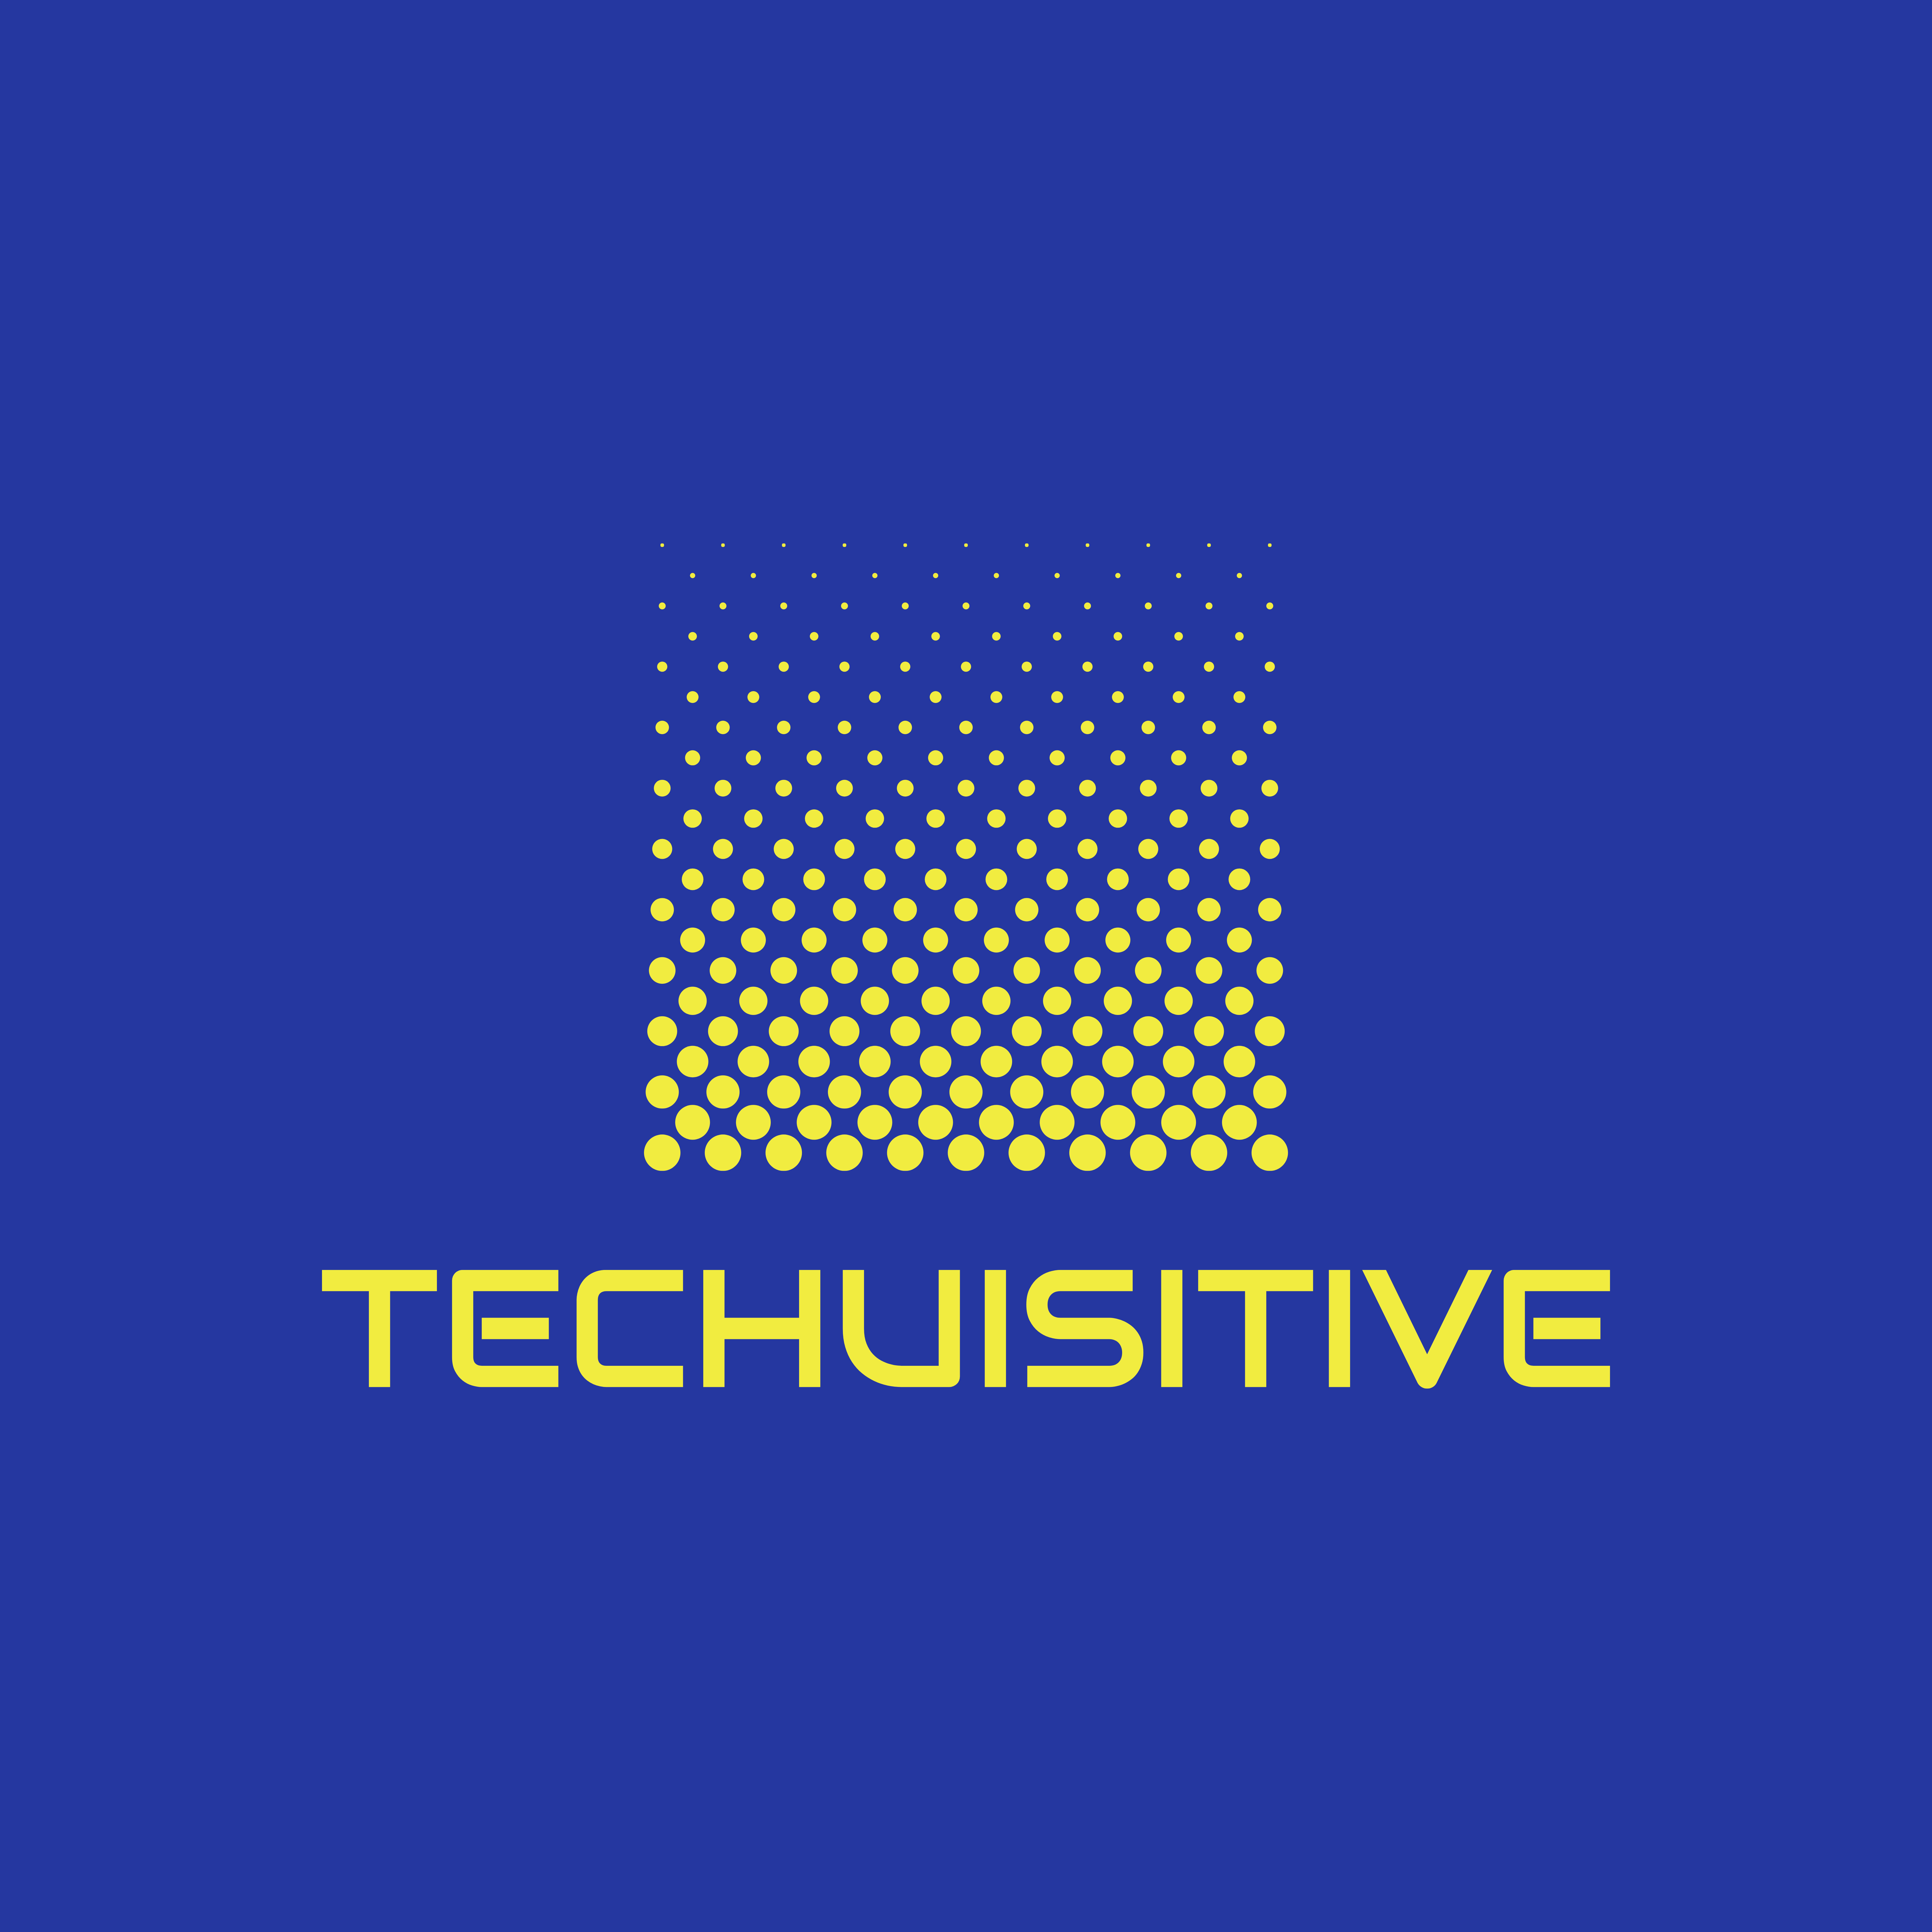 (c) Techuisitive.com